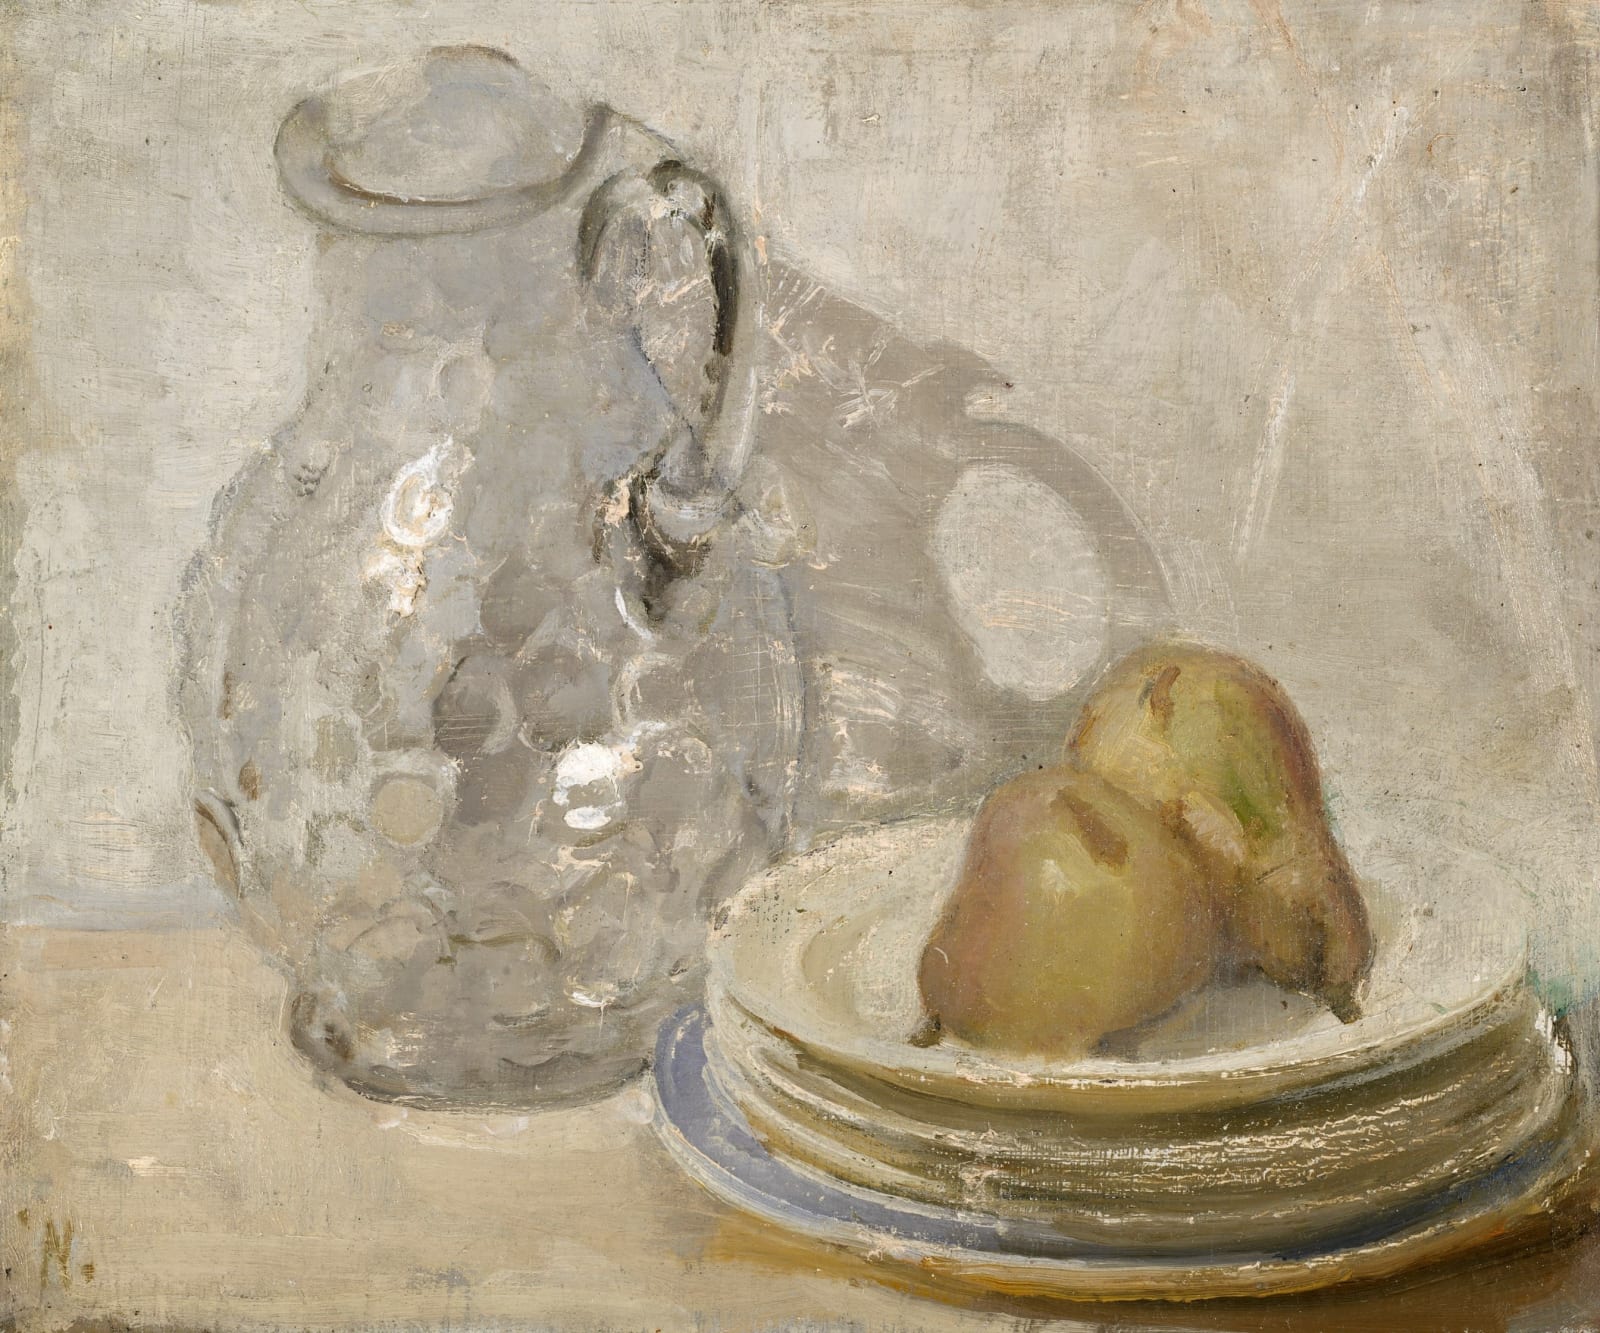 WILLIAM NICHOLSON, Glass jug with pears on plates, circa 1938